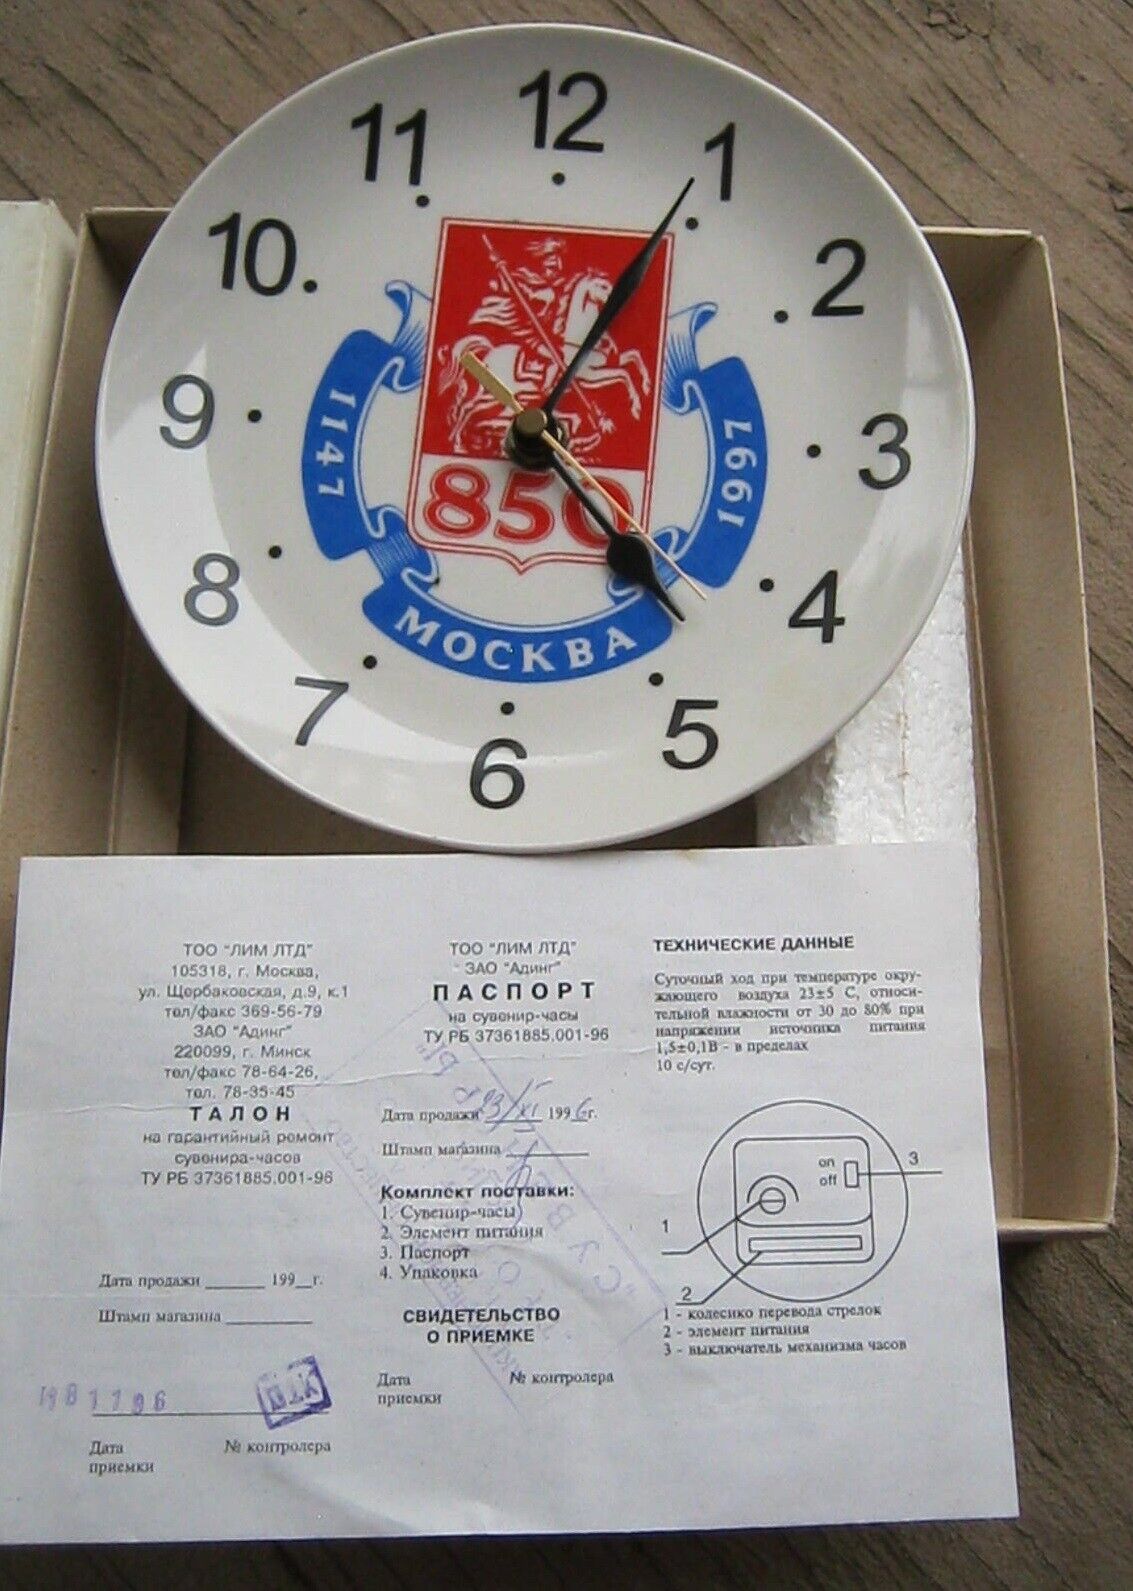 MOCKBA MOSCOW RUSSIA PLATE CLOCK 1147-1997 850 ANNIVERSARY, RARE, VINTAGE IN BOX